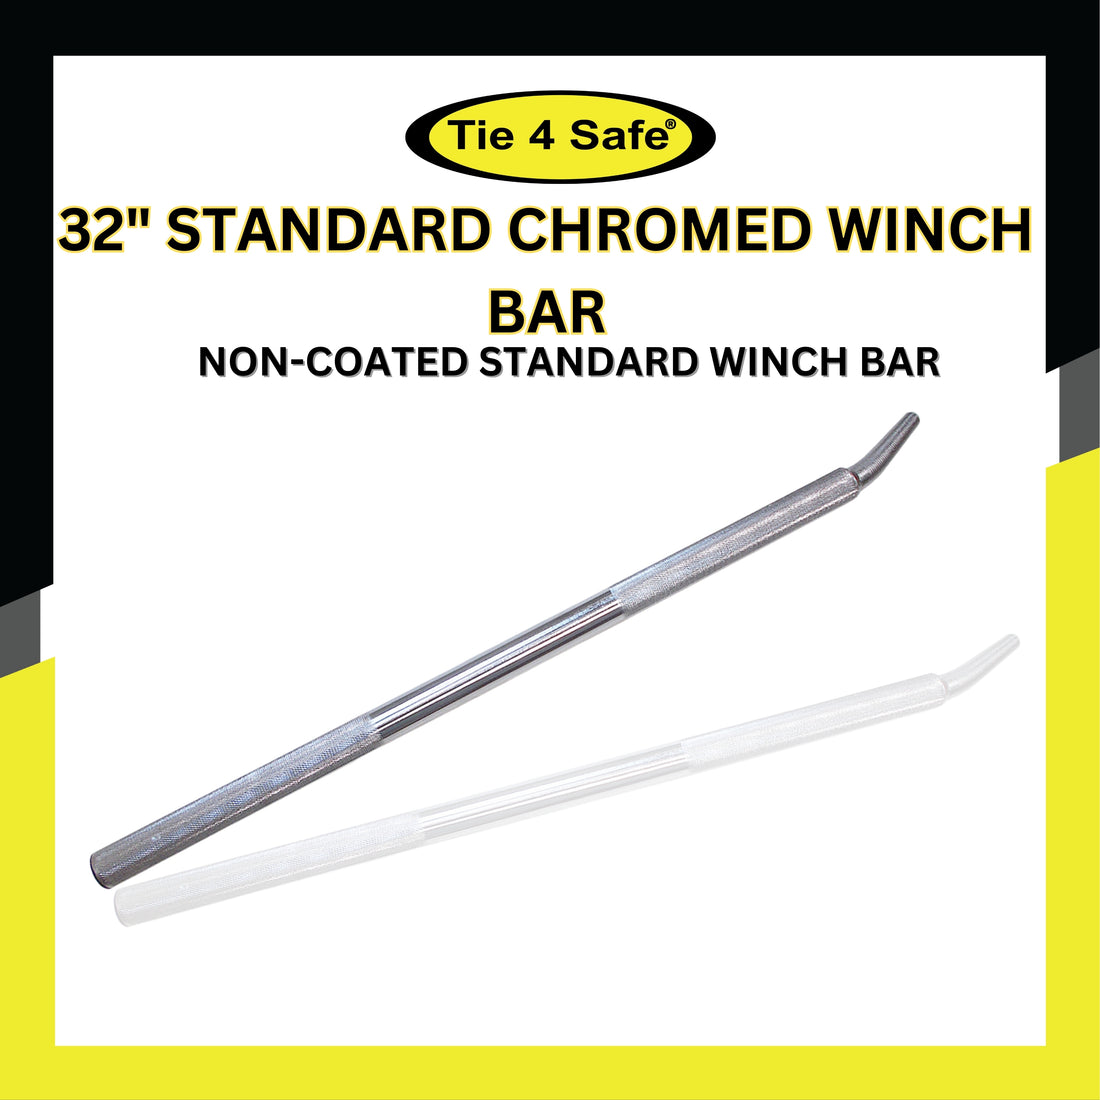 32" Standard Chromed Winch Bar